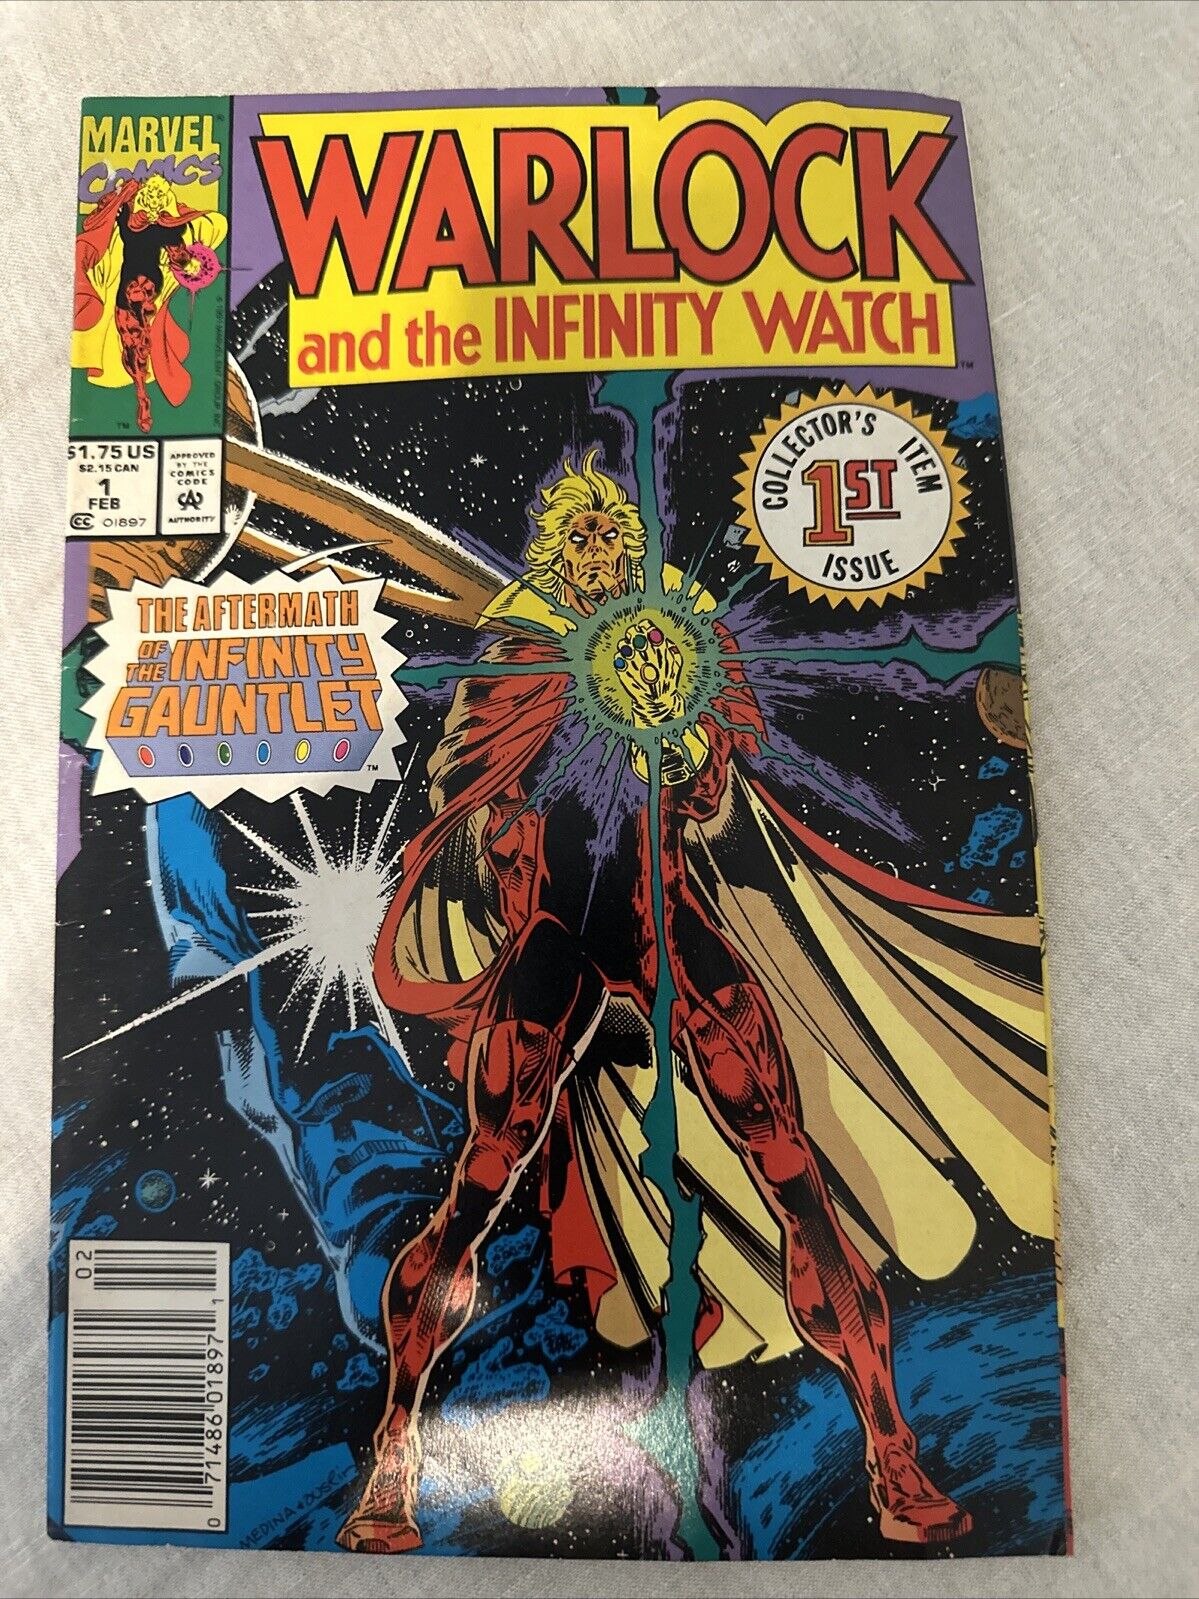 Warlock and the Infinity Watch #1 (Marvel Comics February 1992)